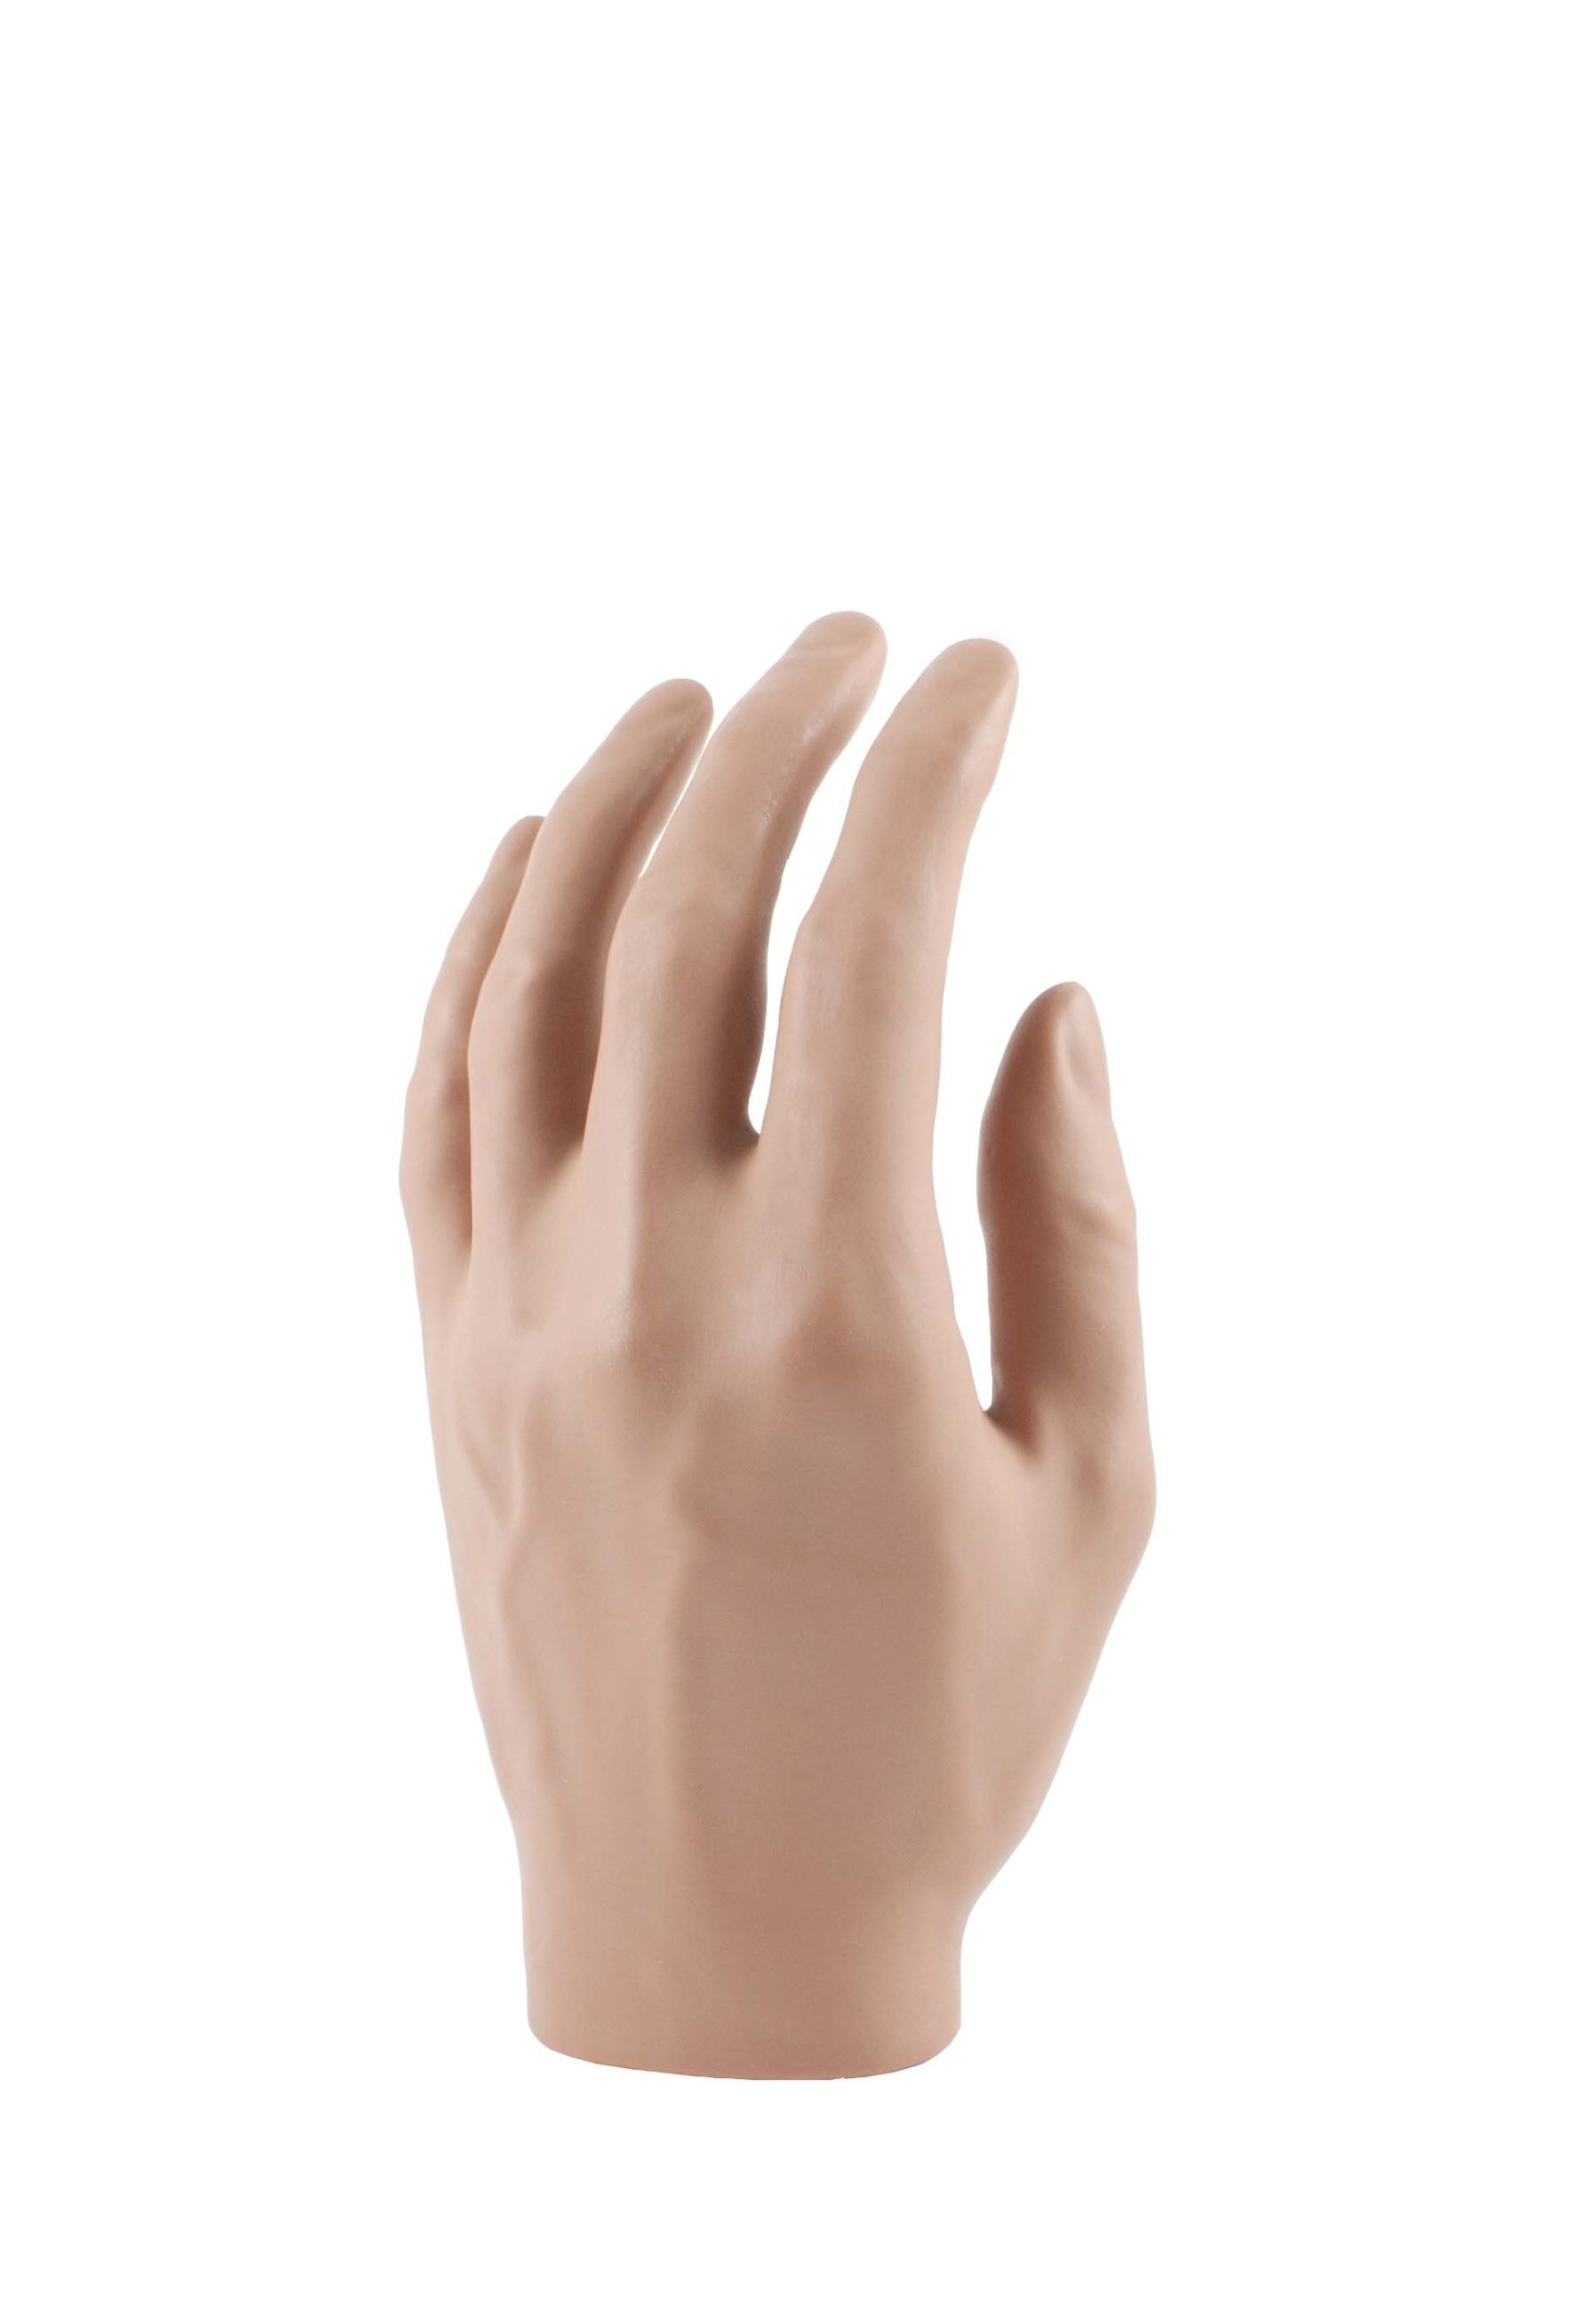 Prosthetics: Passive Hand, Dark Beige, Size L, Left